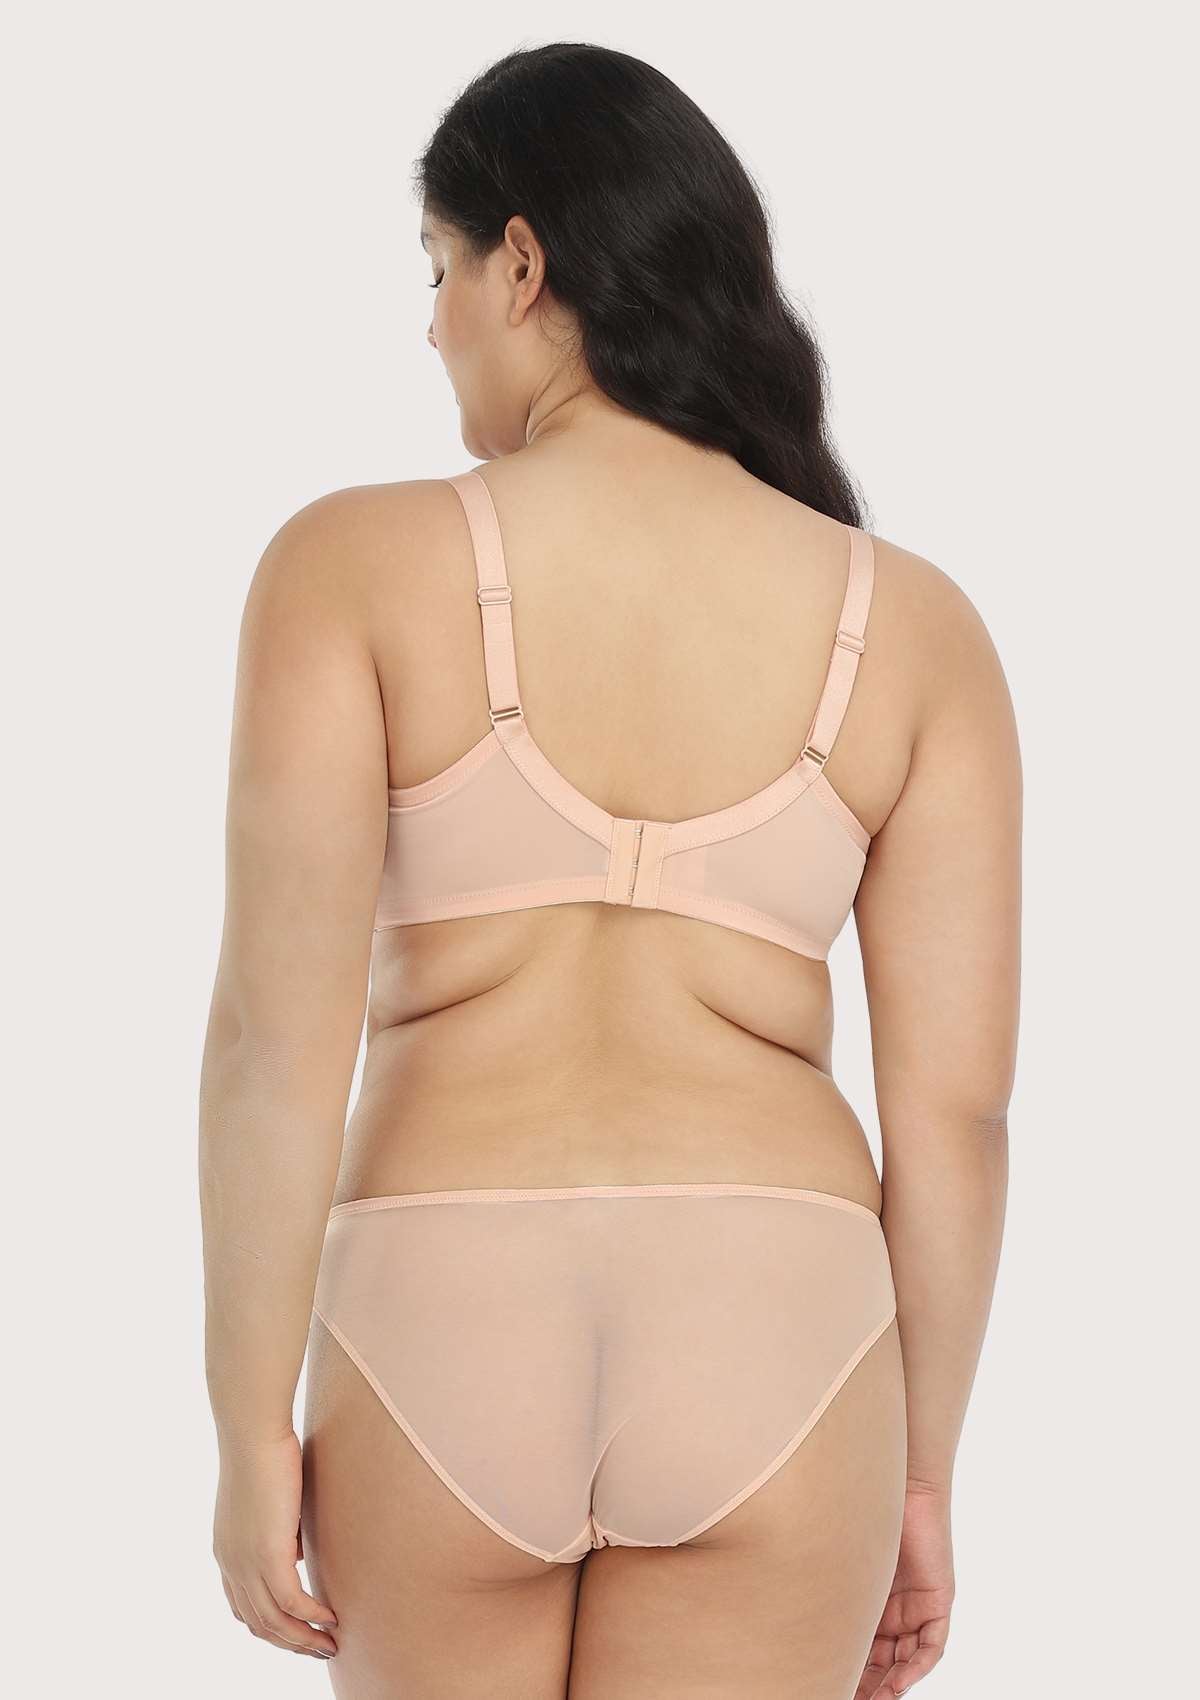 HSIA Sunflower Matching Bra And Panties Set: Comfortable Plus Size Bra - Pink / 38 / D